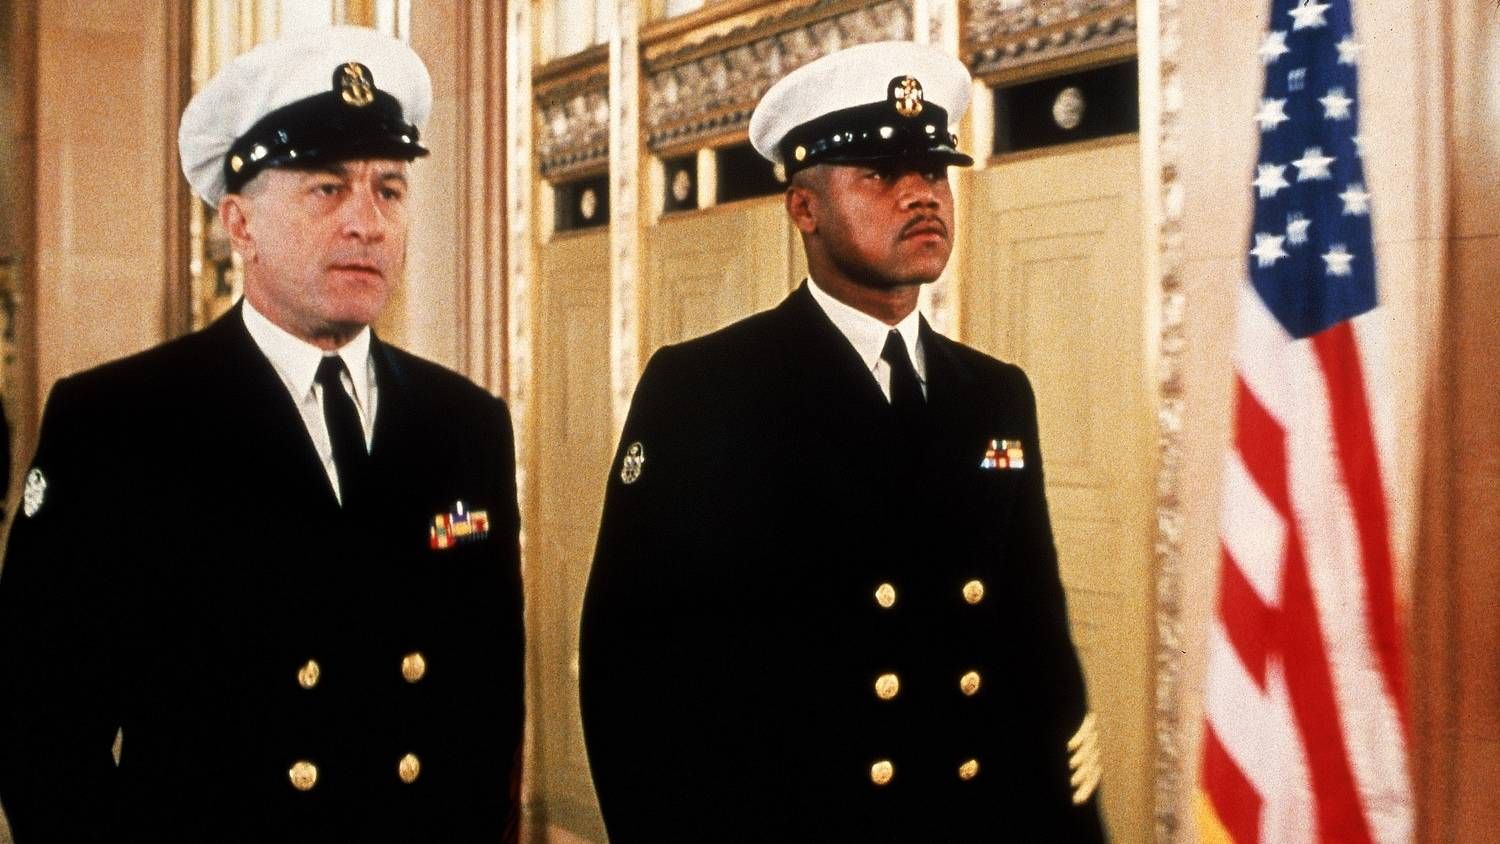 Cuba Gooding Jr. and Robert De Niro on the scene of Men Of Honor